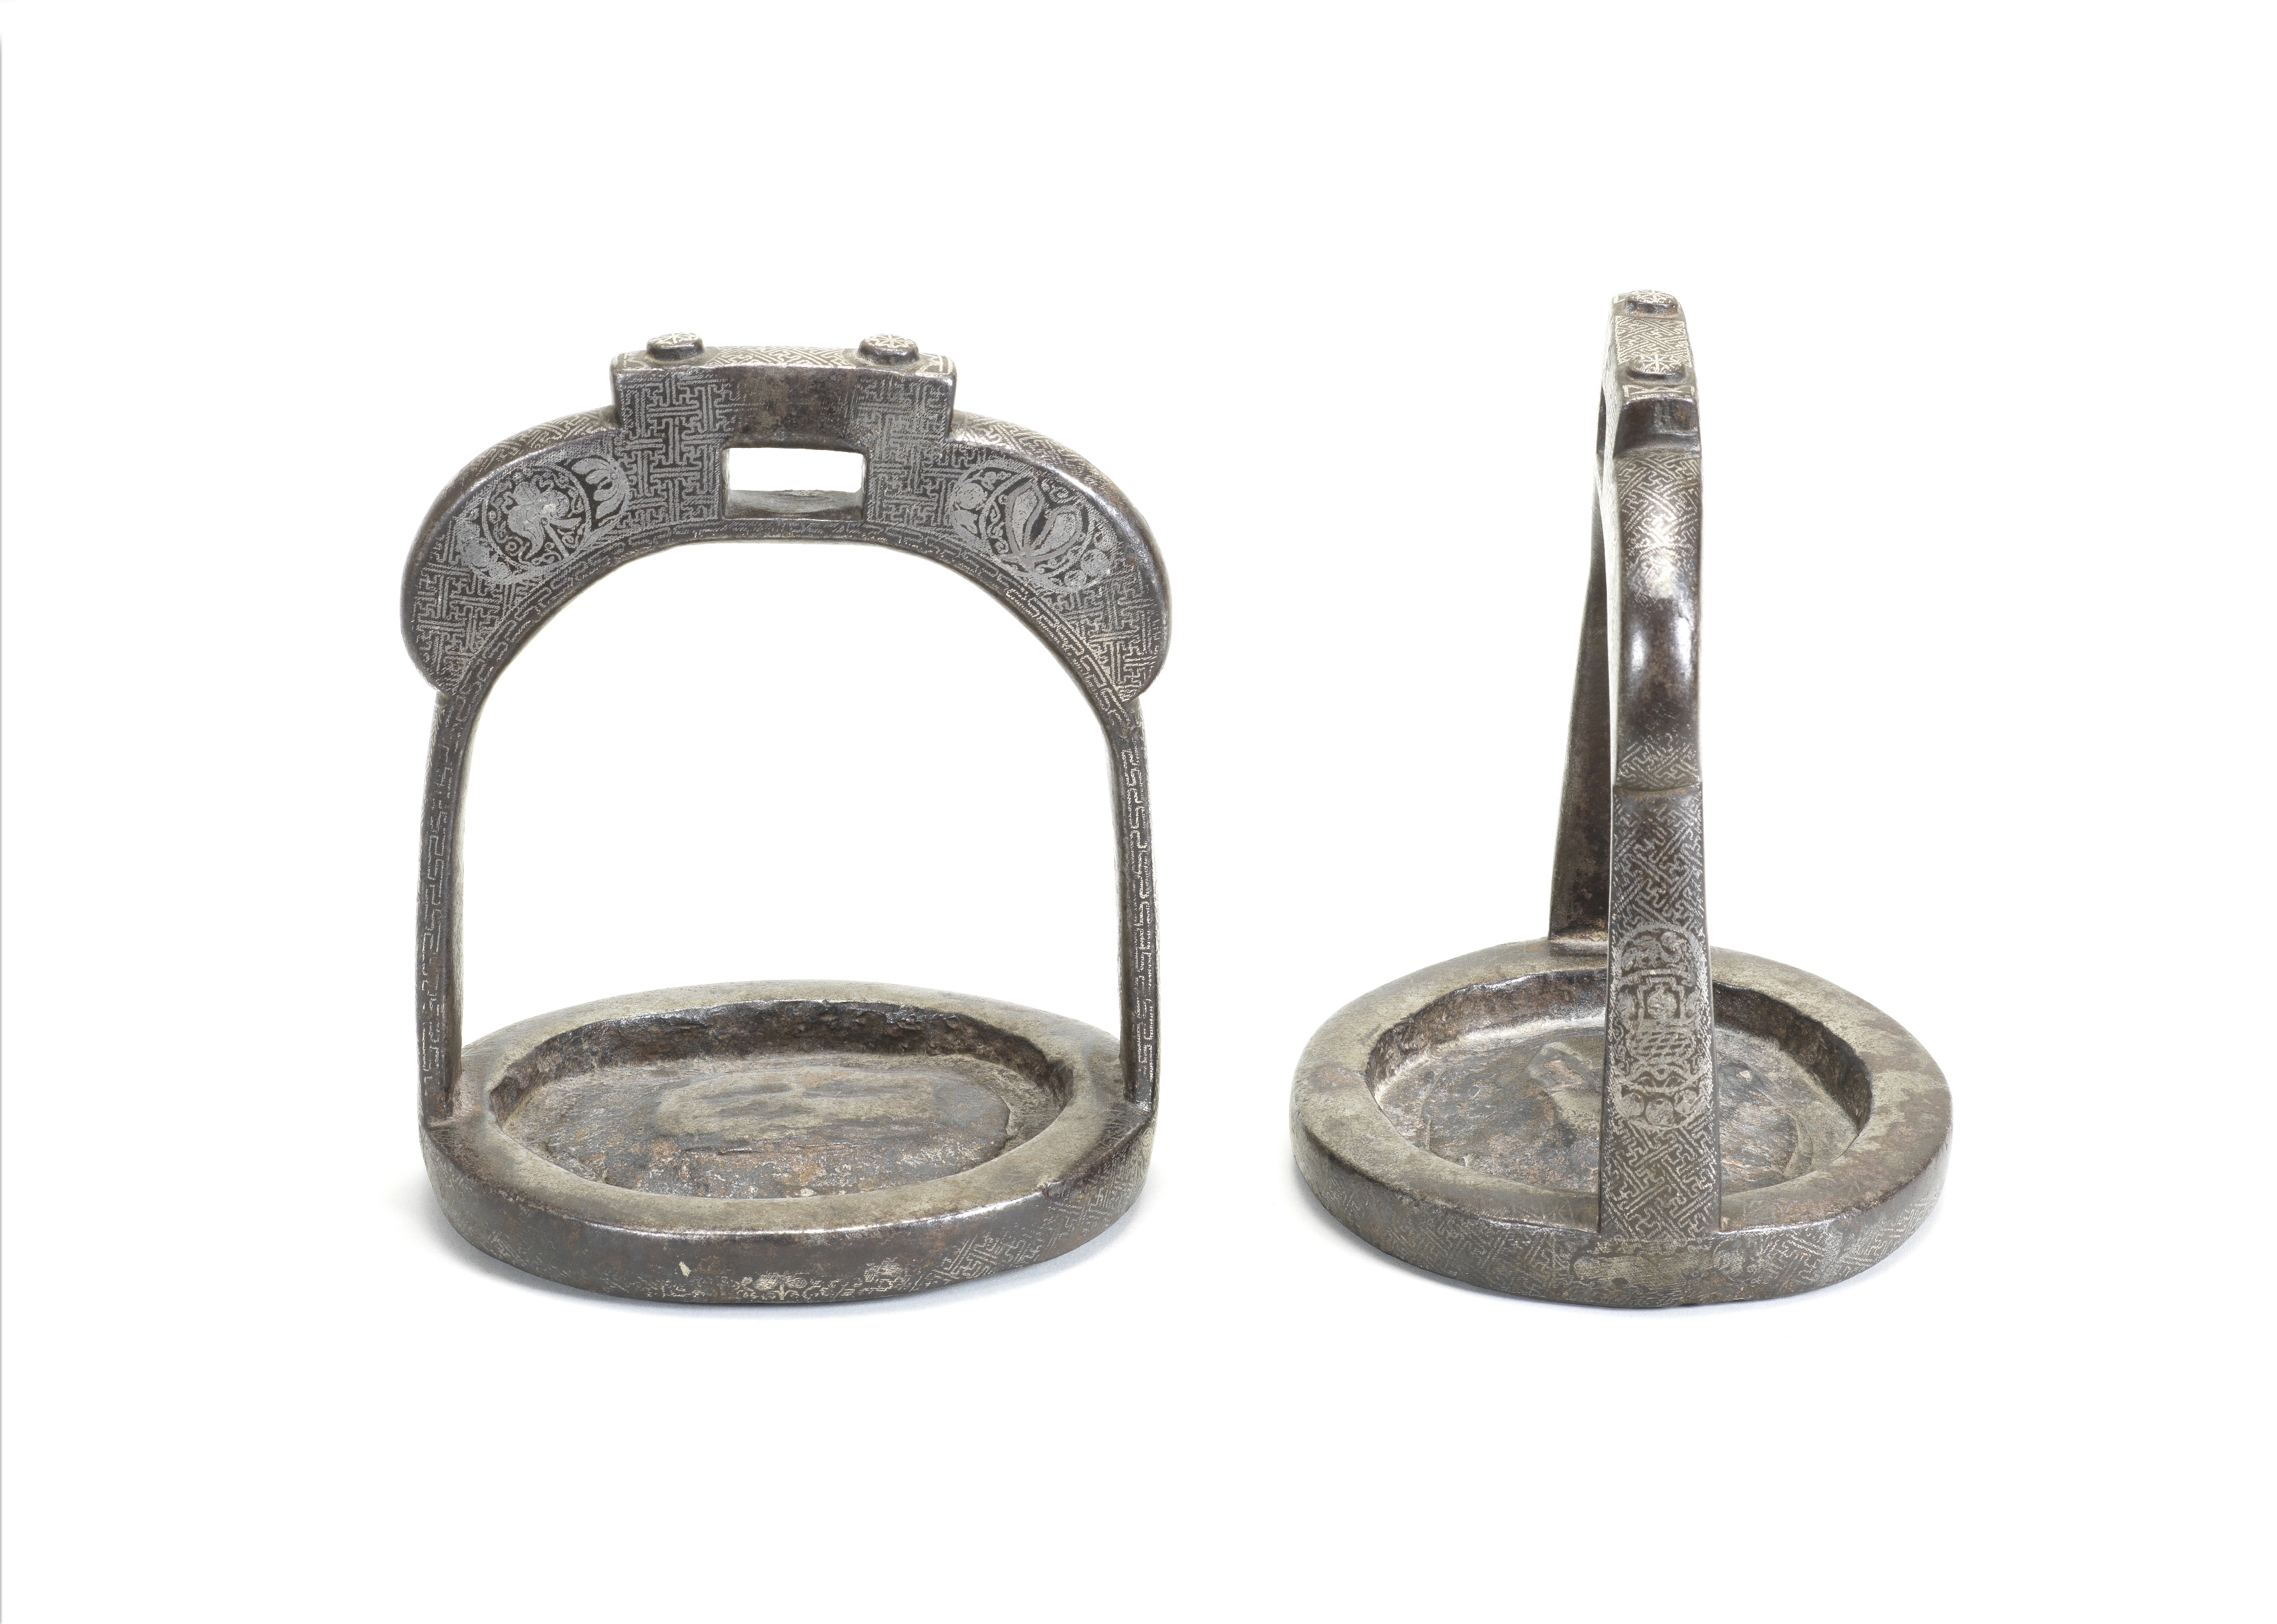 A pair of inlaid iron stirrups Probably Korean, Joseon dynasty (1392-1897), 18th/19th century (2)